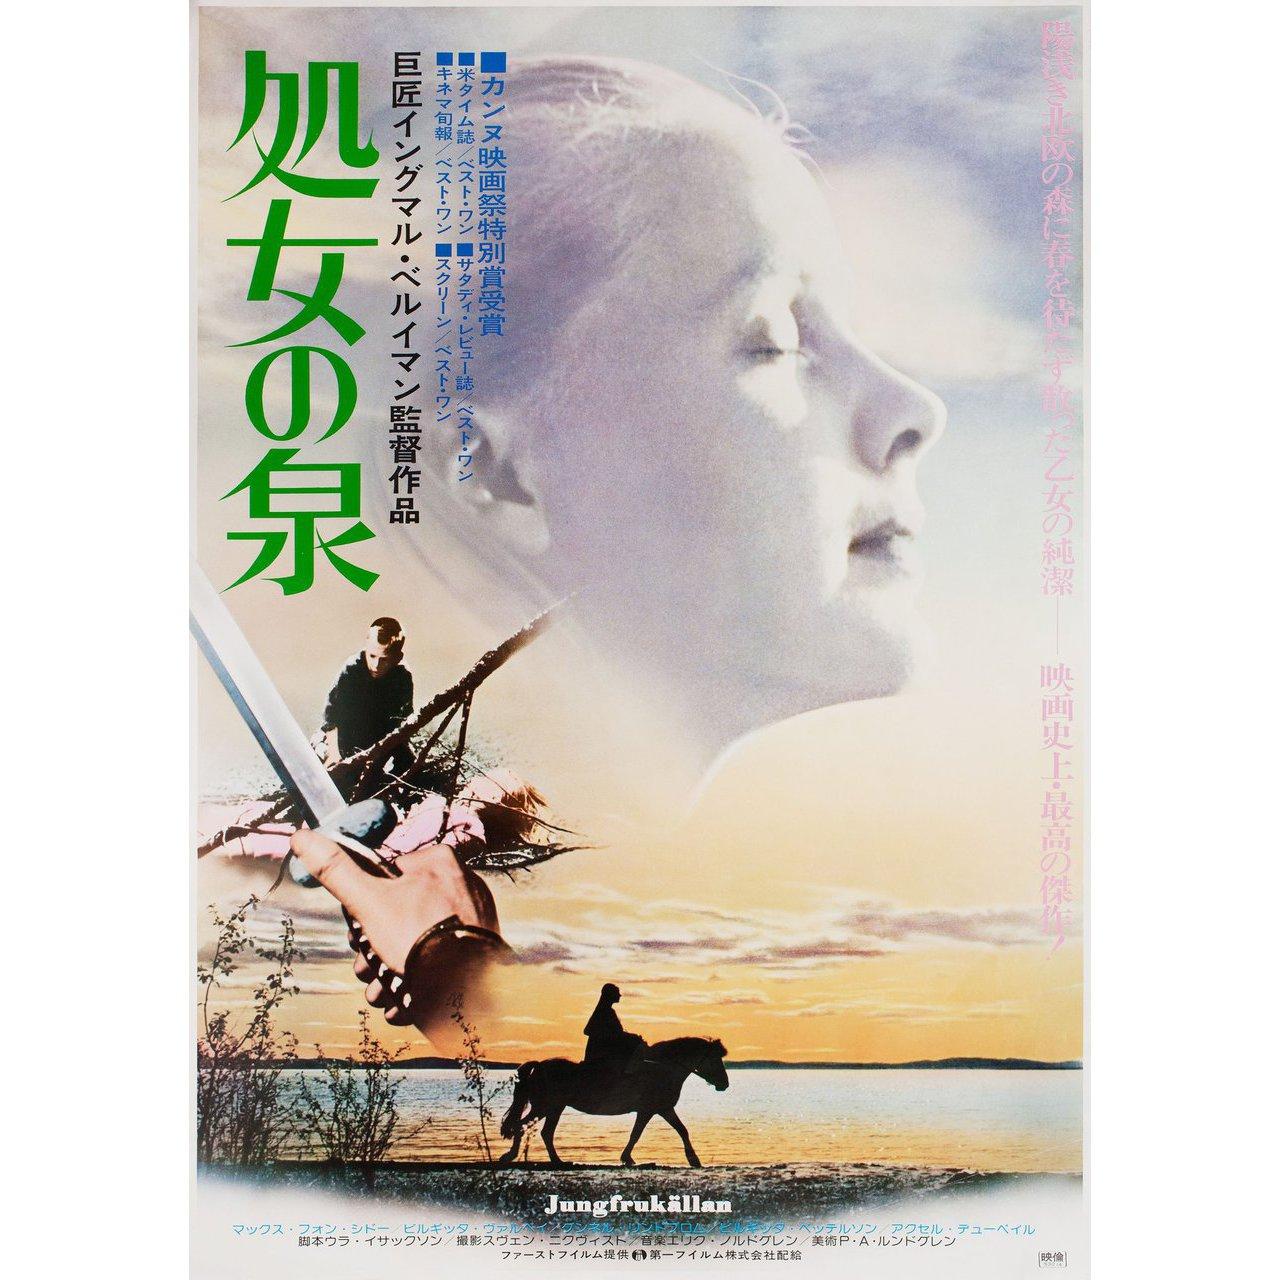 Original 1978 re-release Japanese B2 poster for the 1960 film The Virgin Spring (Jungfrukallan) directed by Ingmar Bergman with Max von Sydow / Birgitta Valberg / Gunnel Lindblom / Birgitta Pettersson. Very Good-Fine condition, rolled. Please note: